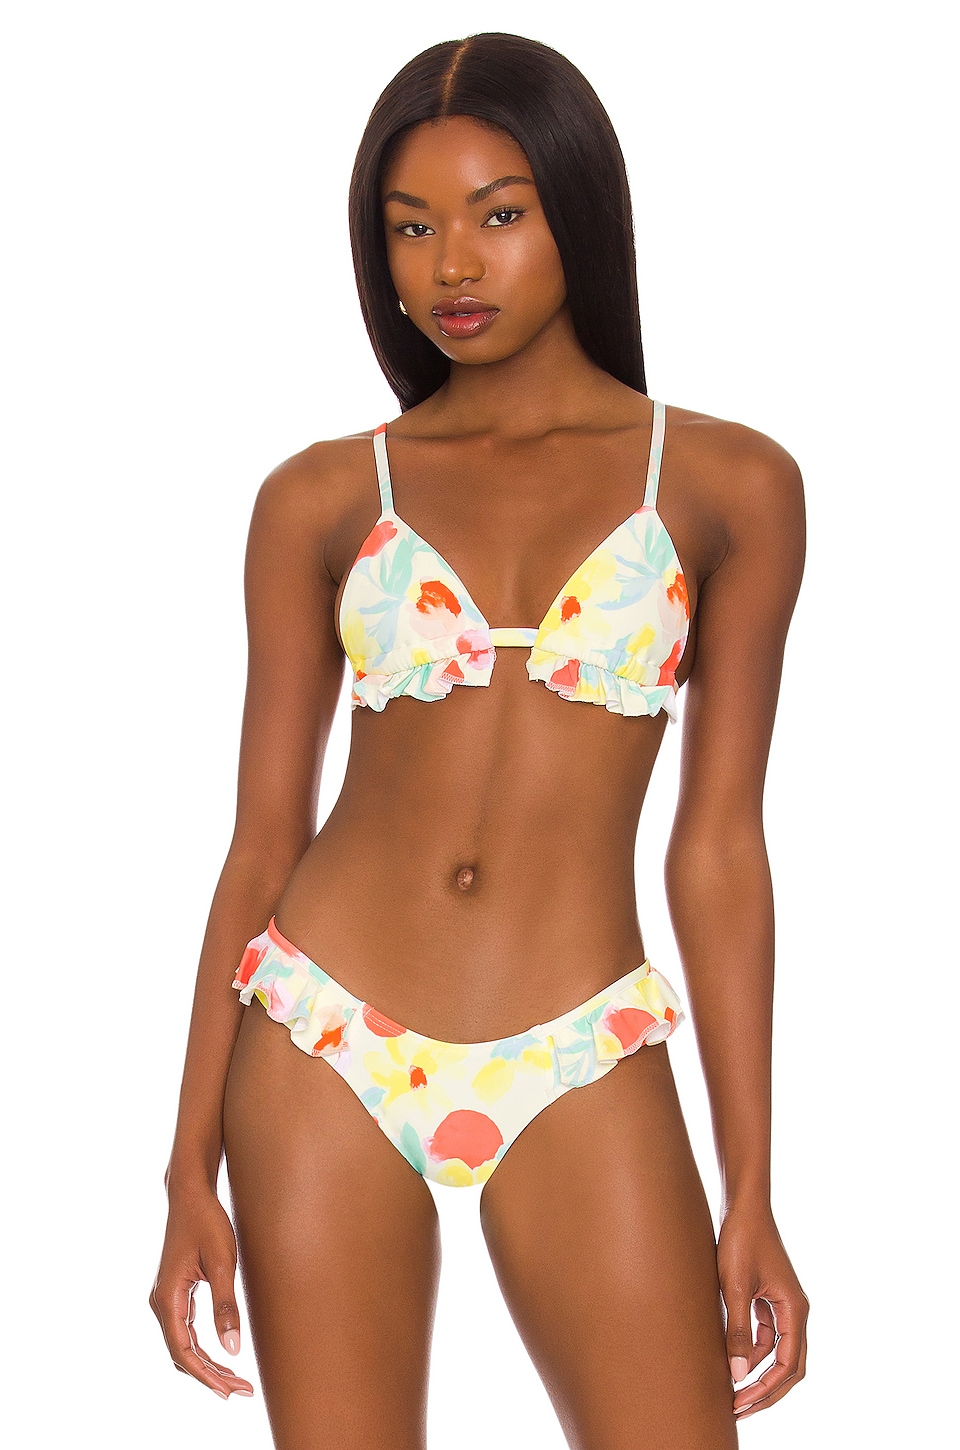 Montce Swim Ruffle Triangle Bikini Top in Helena Floral REVOLVE